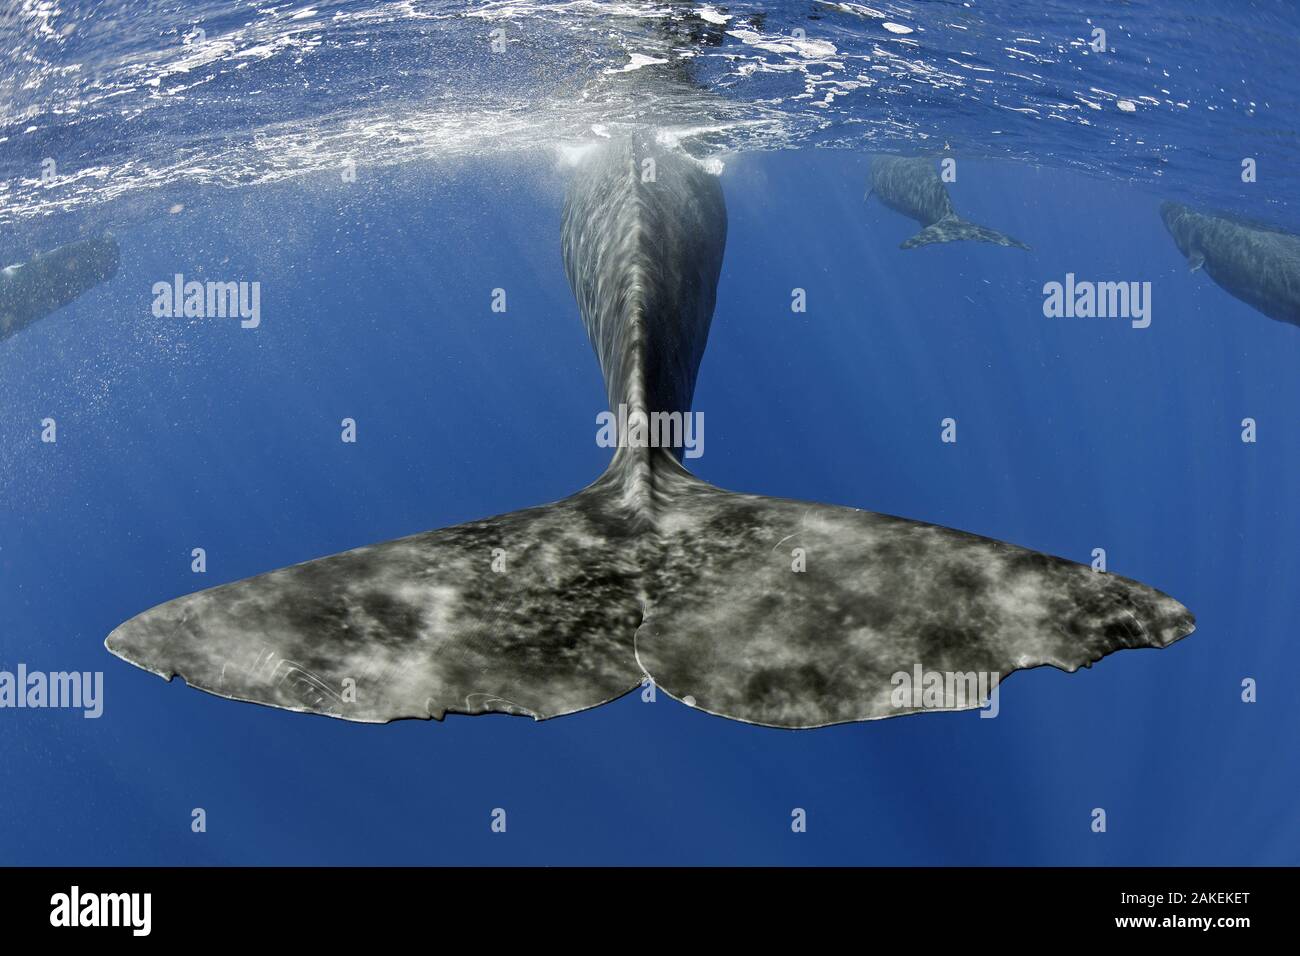 Pottwal (Physeter macrocephalus) Schwanz unter Wasser als Wal Oberflächen, Dominica, Karibik, Atlantik, gefährdete Arten. Stockfoto